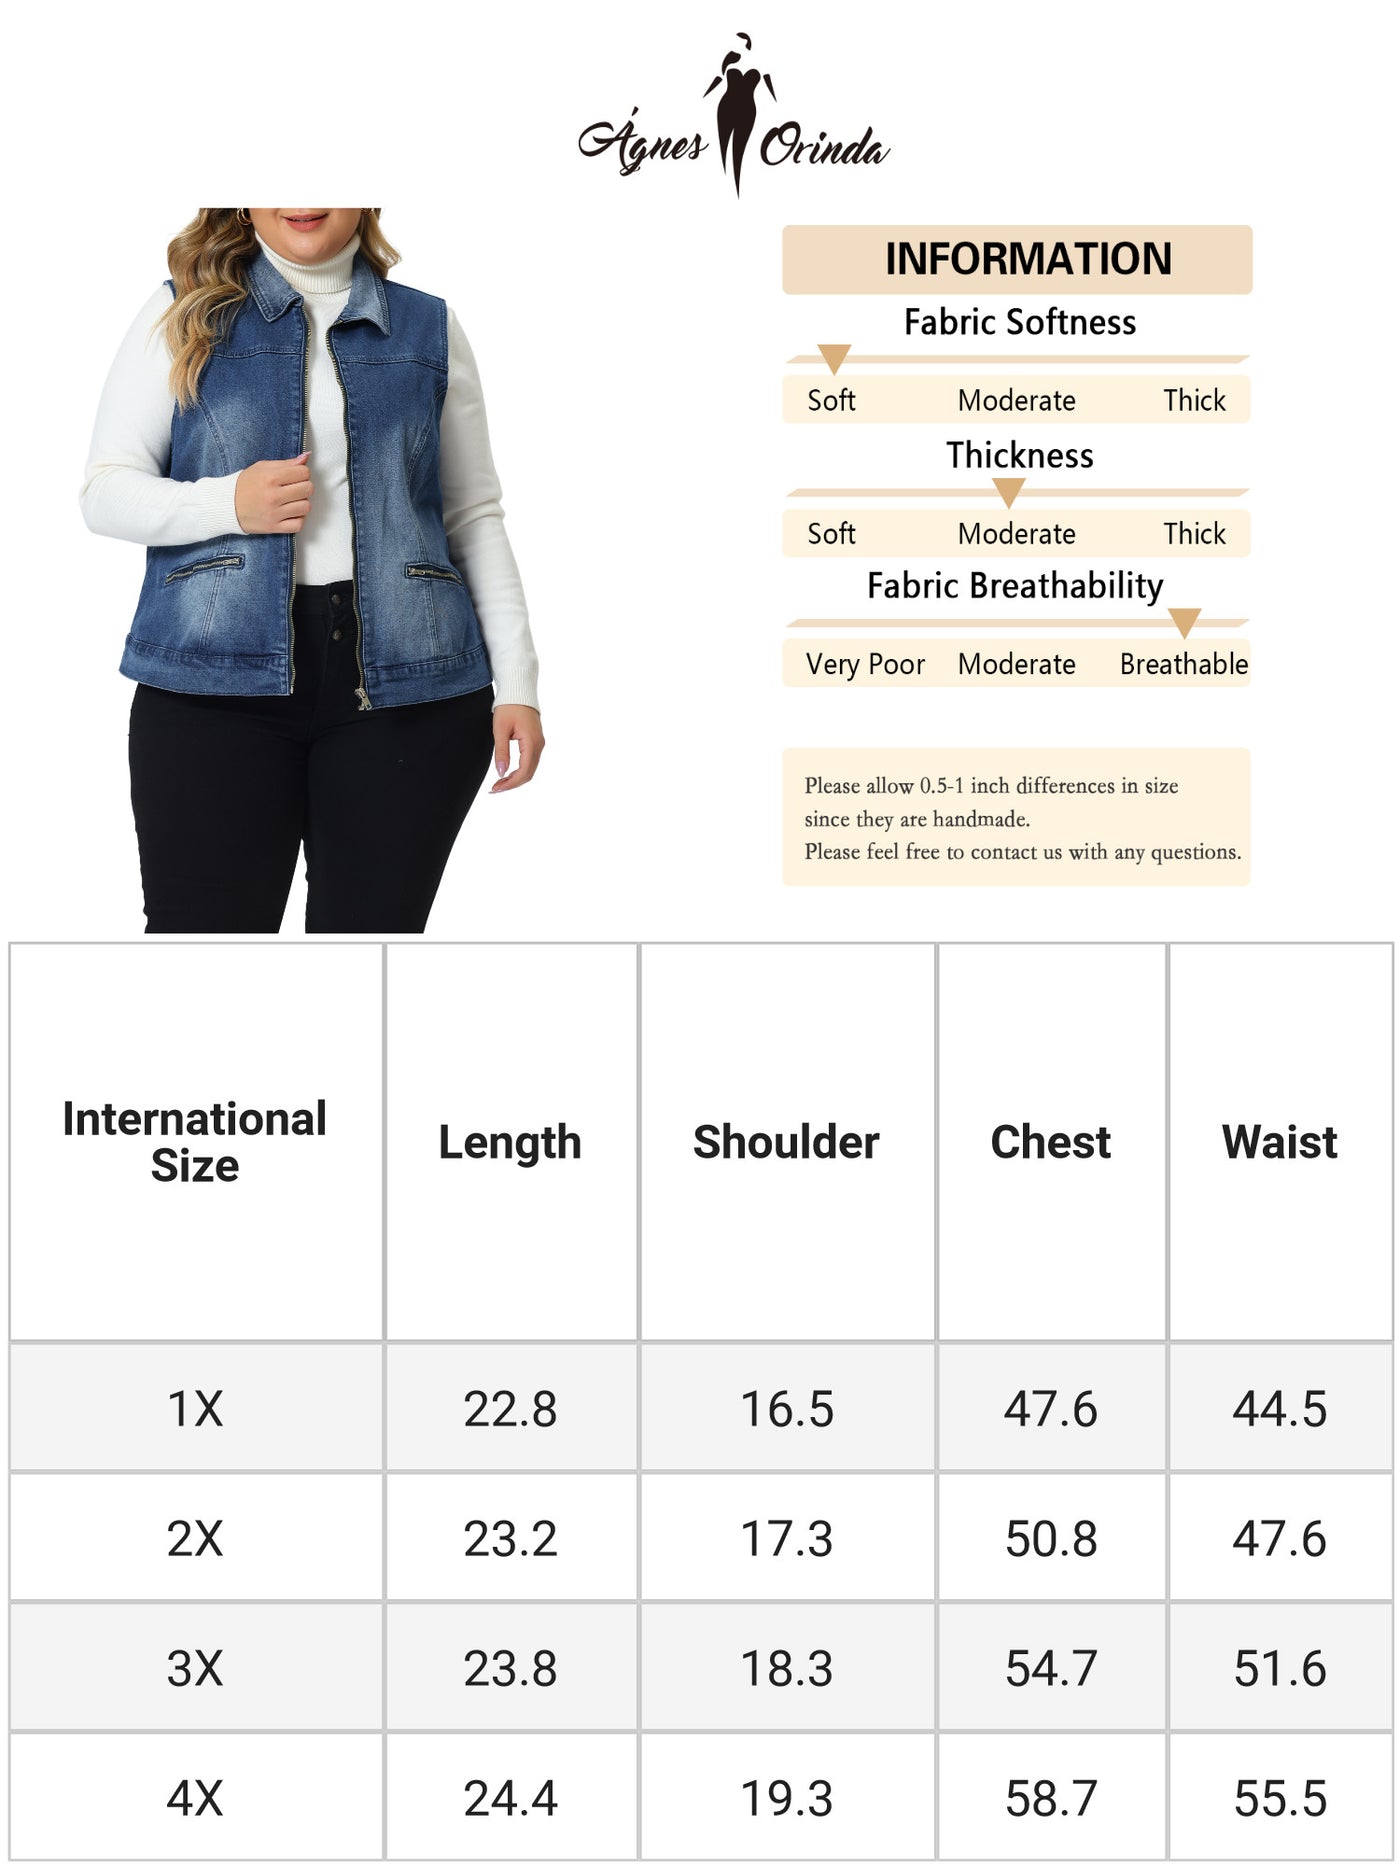 Bublédon Plus Size Causal Sleeveless Zip Washed Denim Vest Jacket